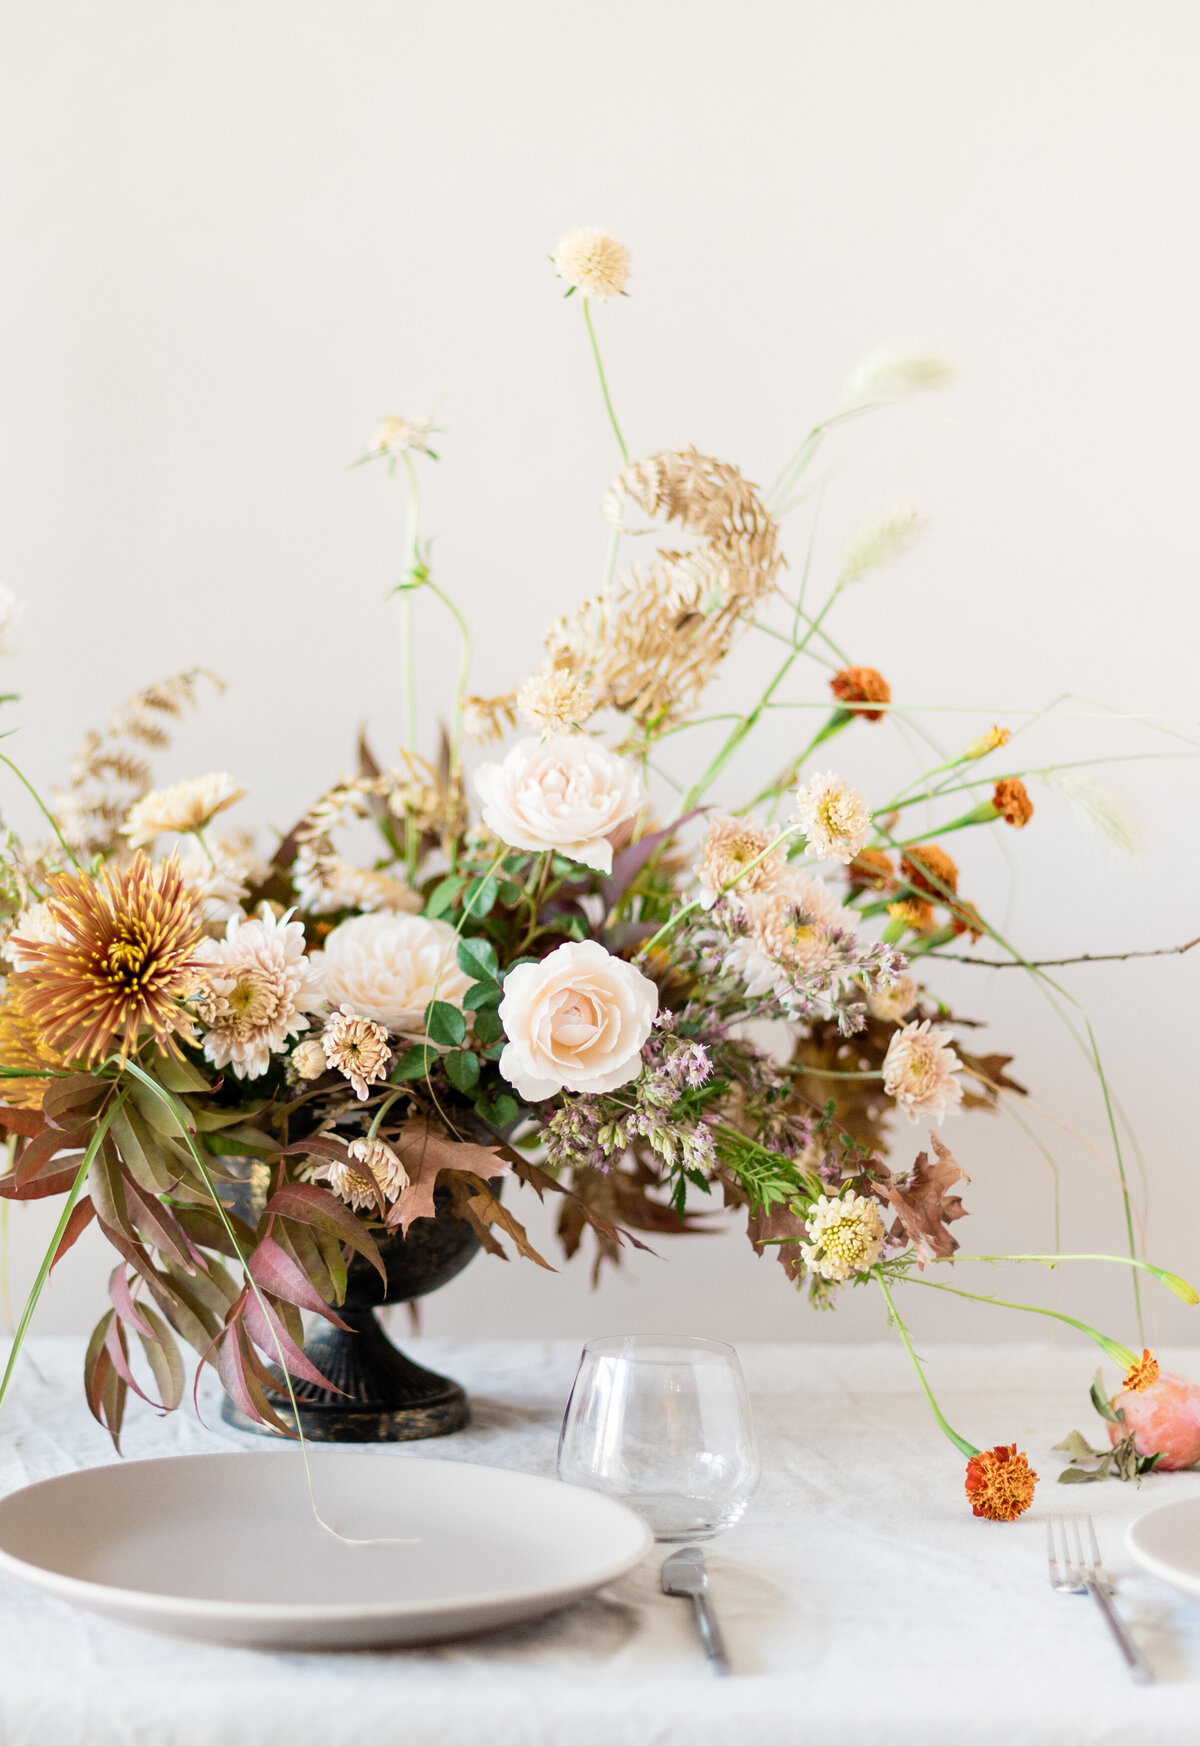 Atelier-Carmel-Wedding-Florist-GALLERY-Arrangements-2